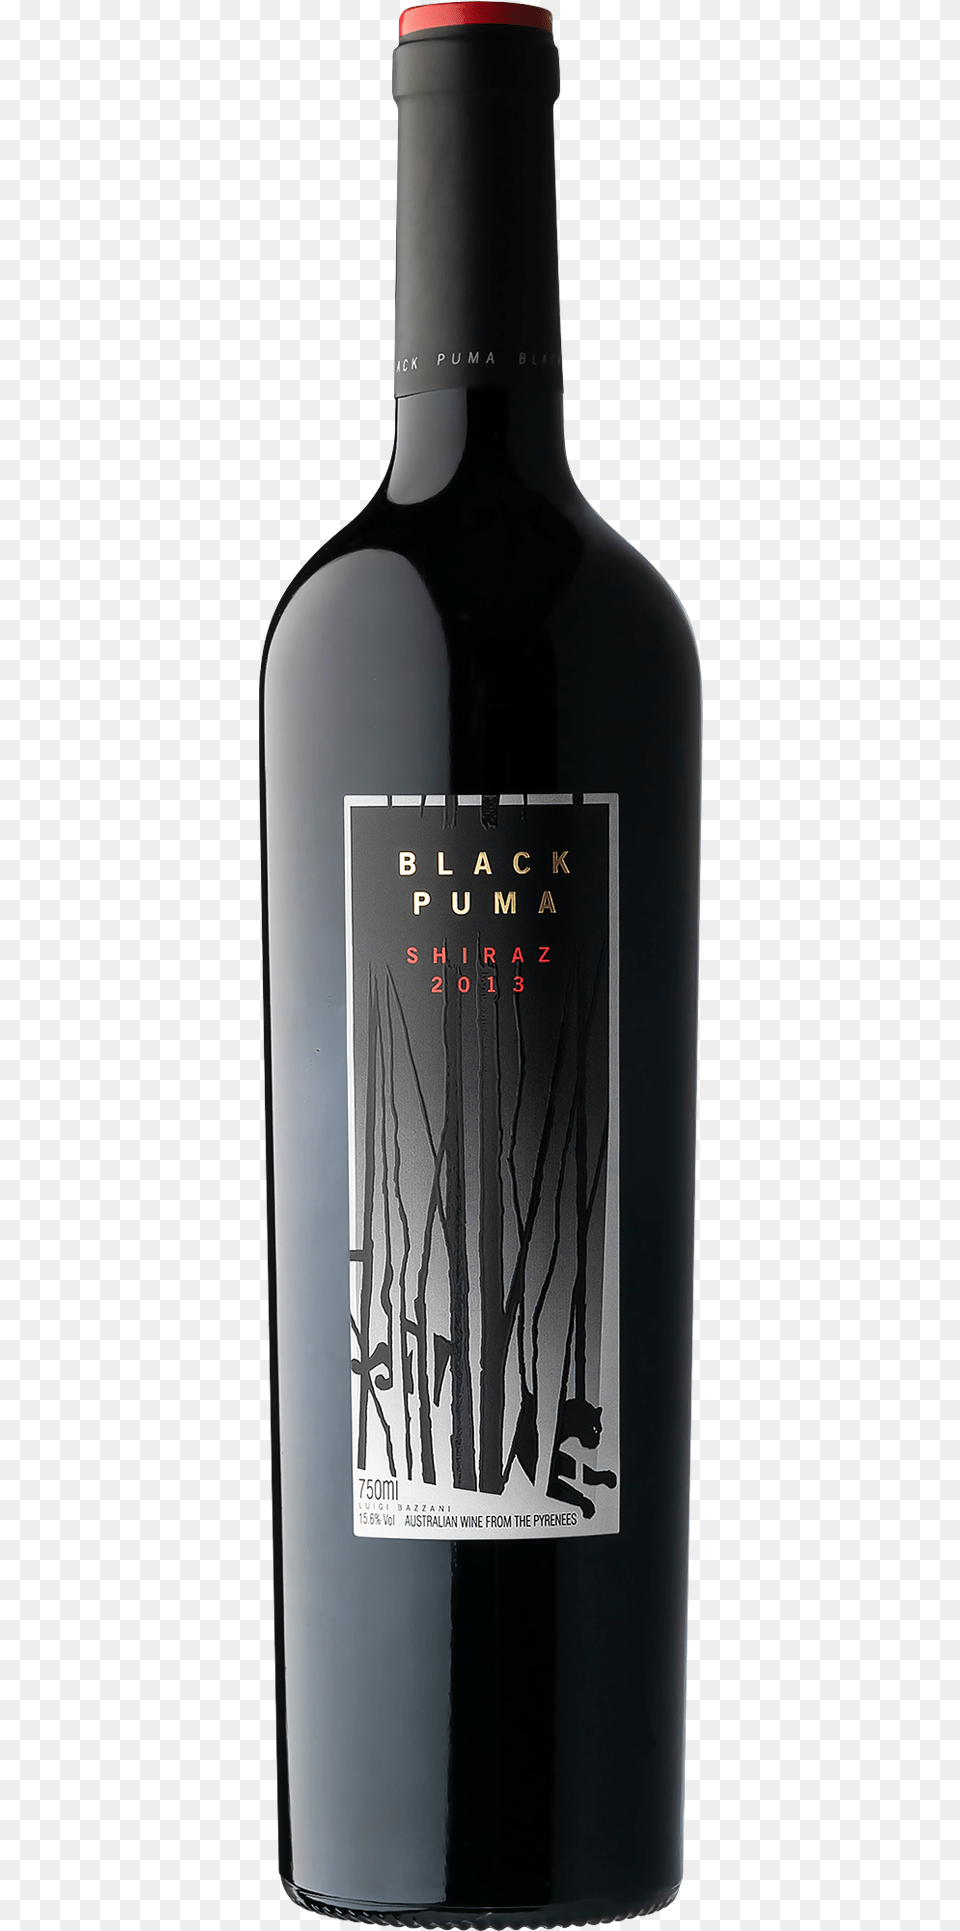 Black Puma 2014 Shiraz, Alcohol, Beverage, Liquor, Bottle Png